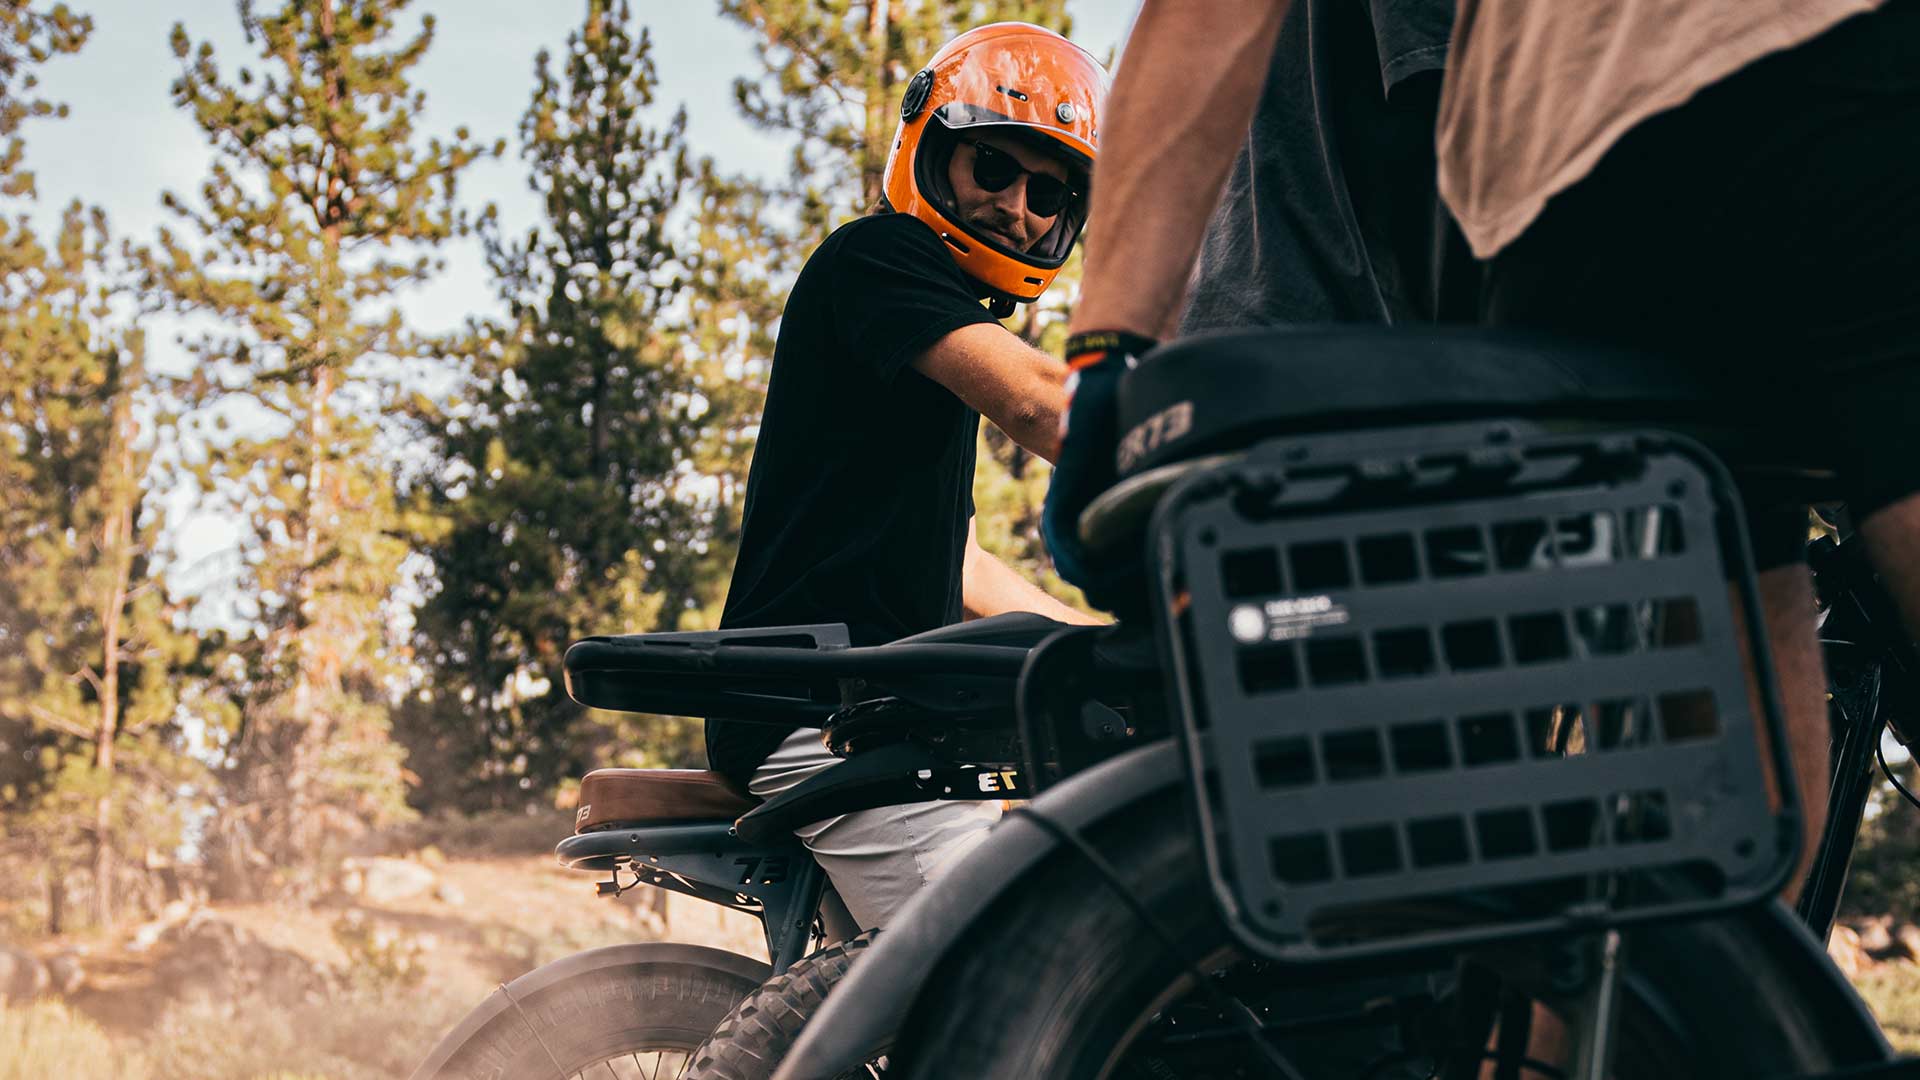 Super73 ebike rider in orange helmet fully accessorized.